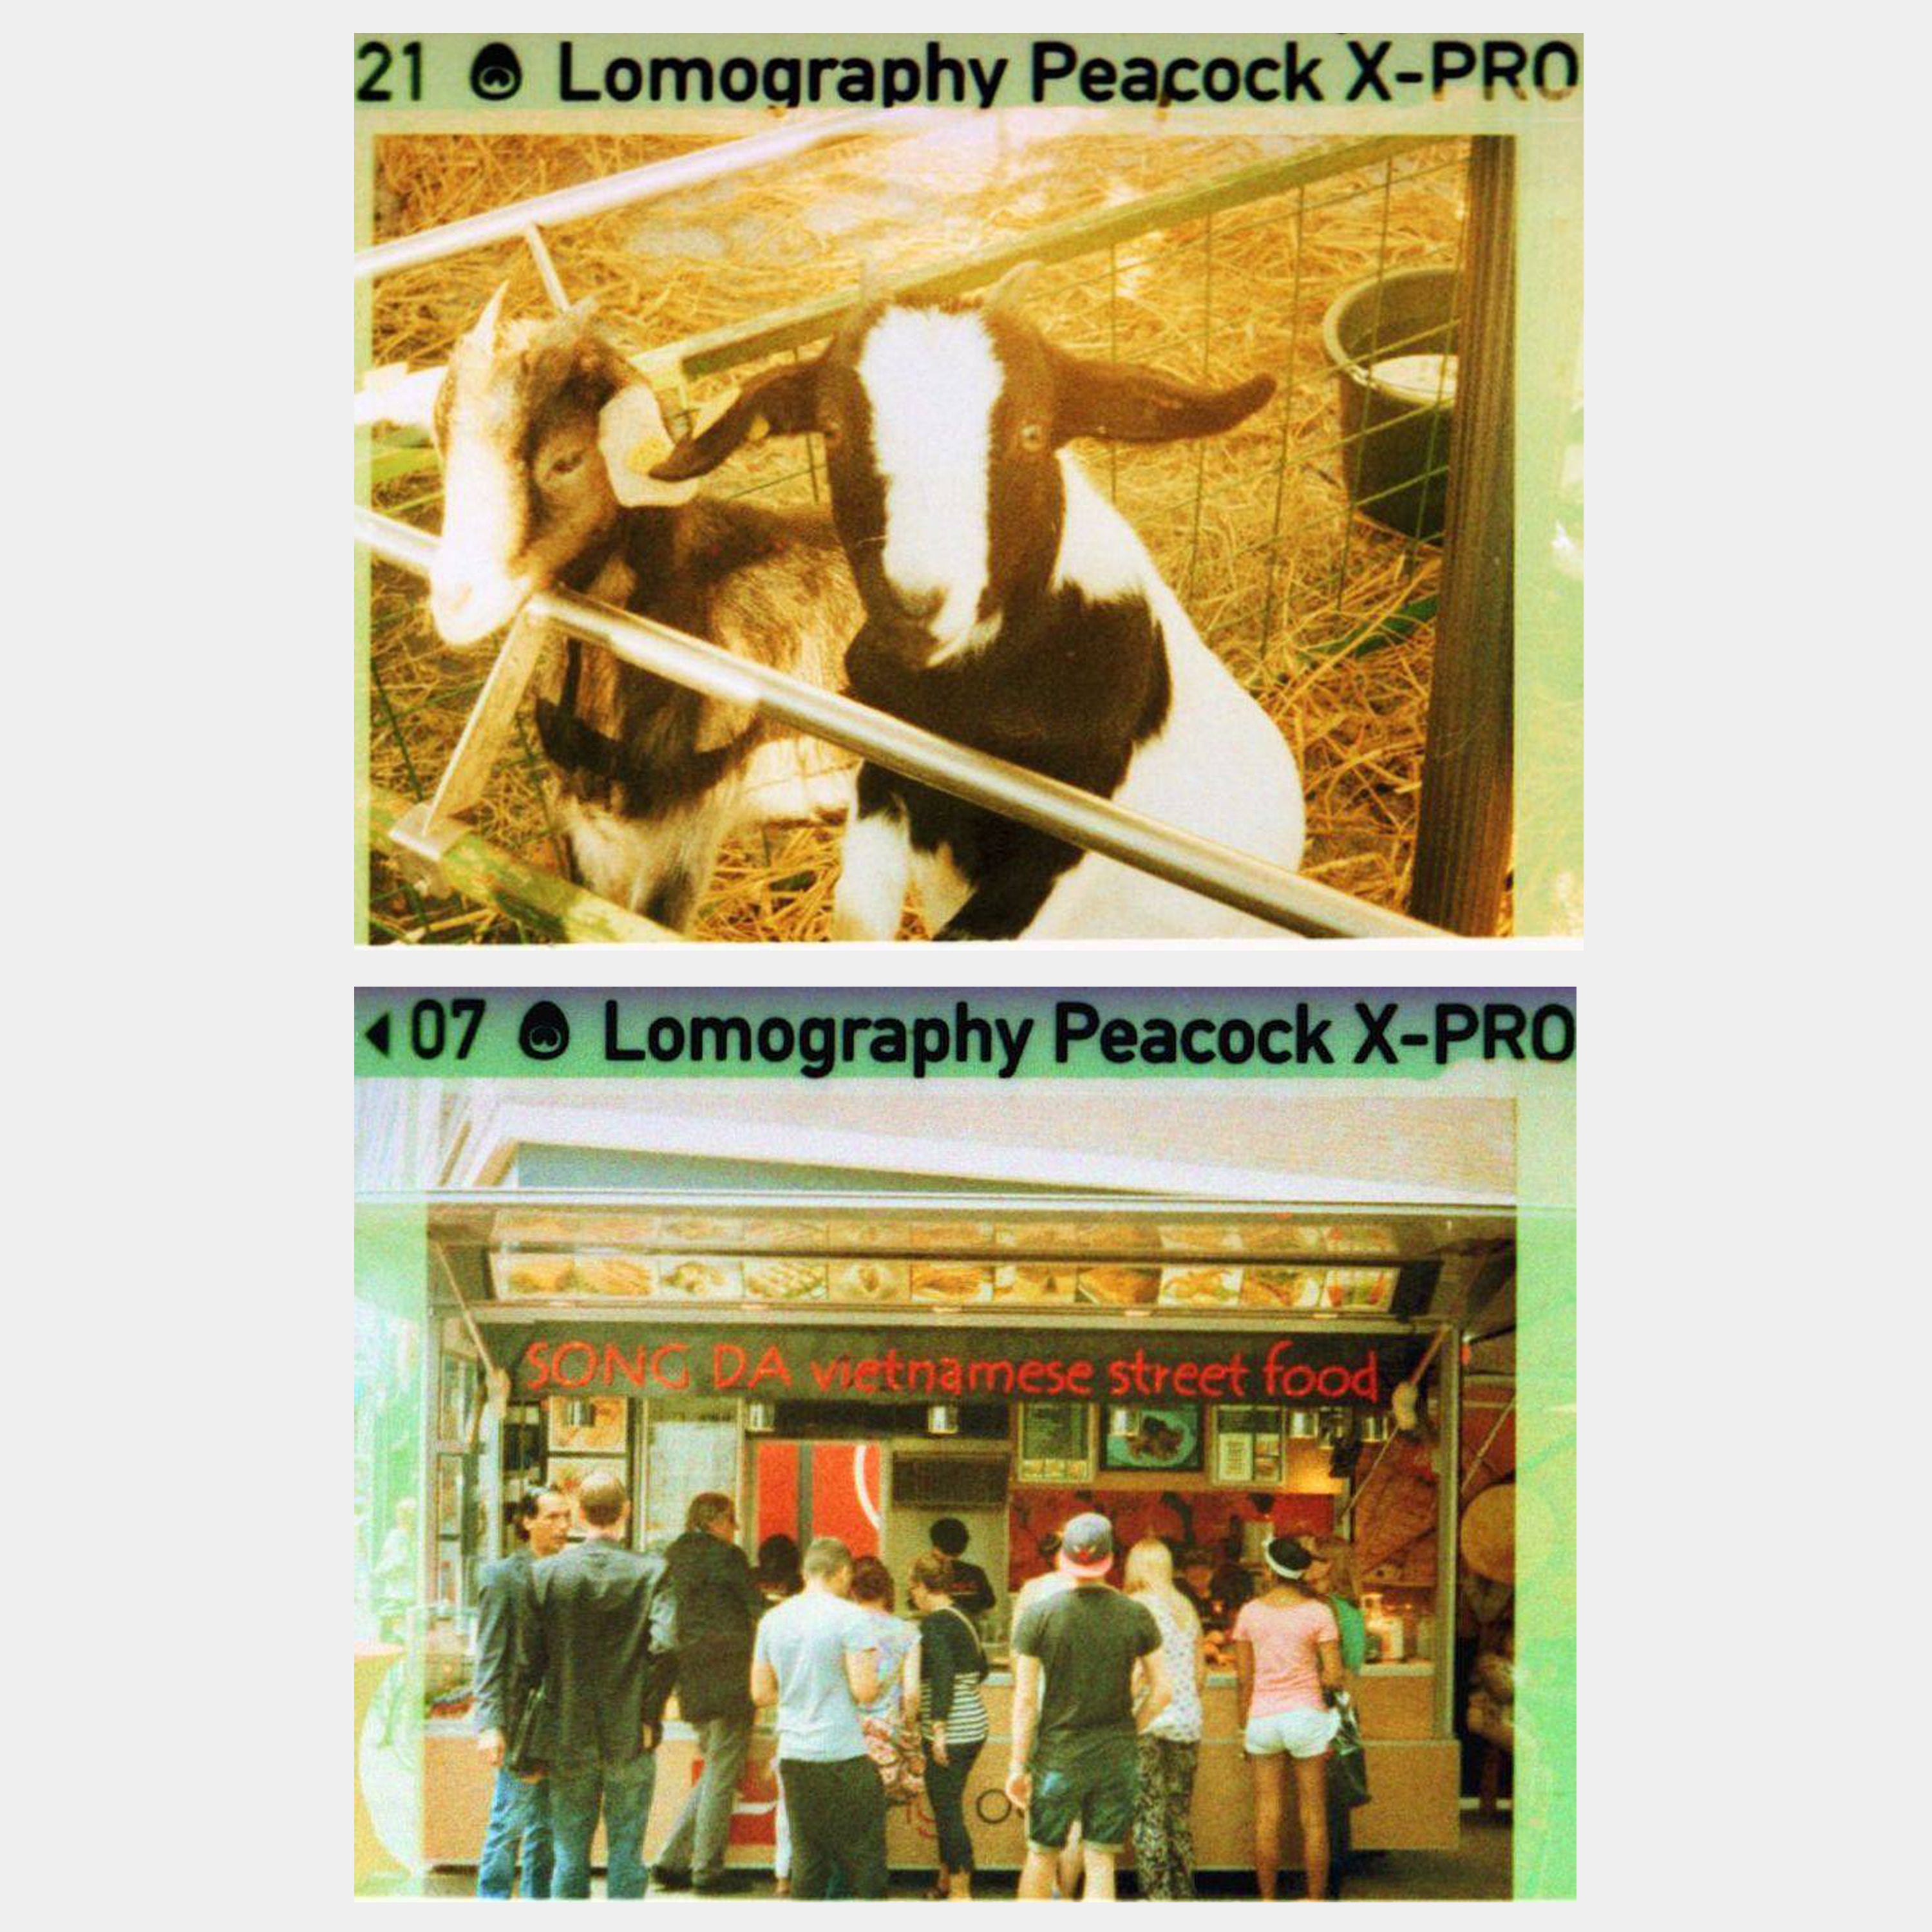 Lomography Peacock X-Pro Slide ISO 200 110 Film (24 Exposures)